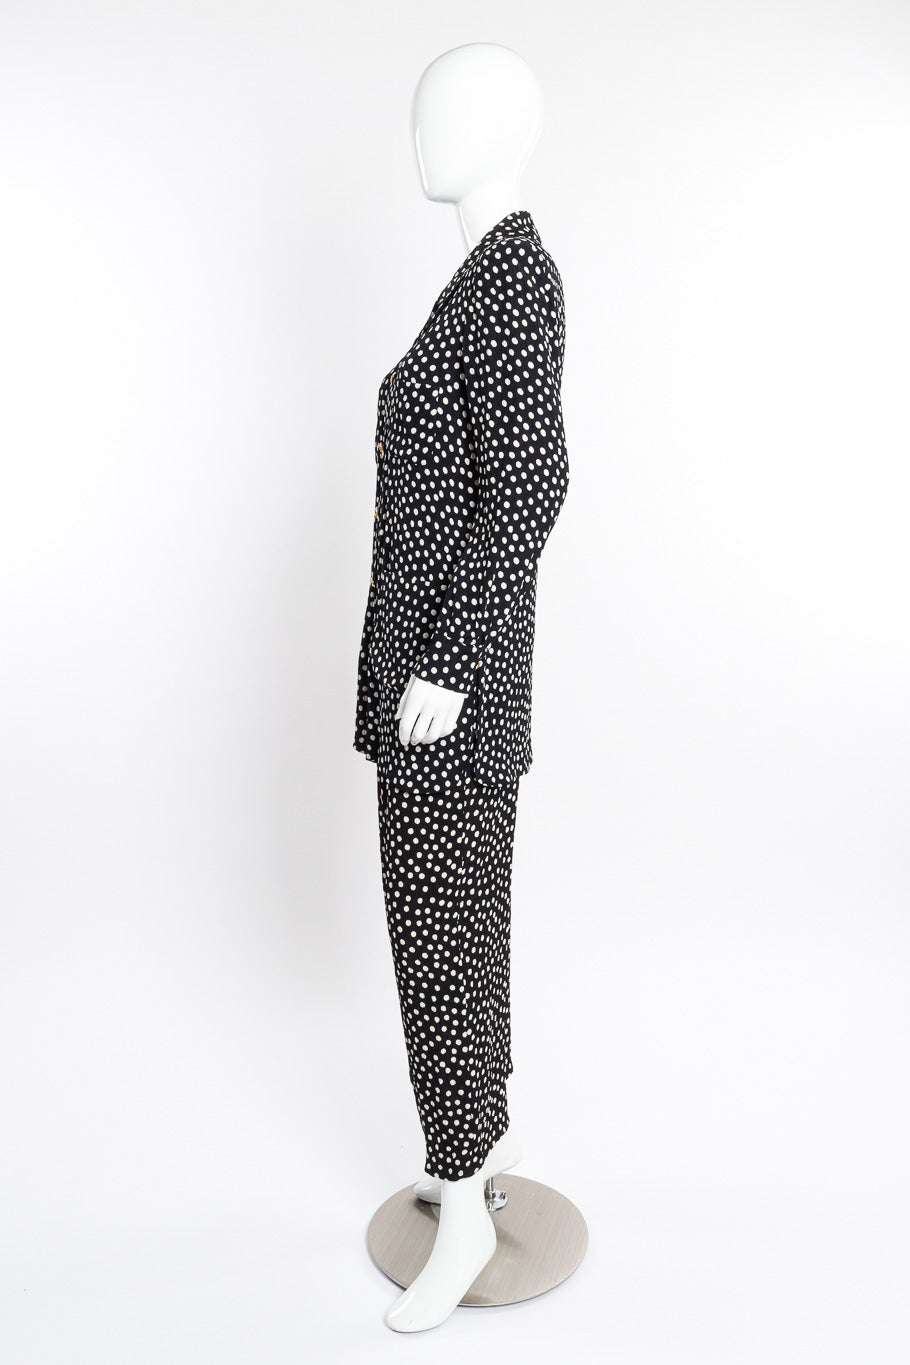 Vintage Sonia Rykiel Polka Dot Jacket and Skirt Set side on mannequin @recessla